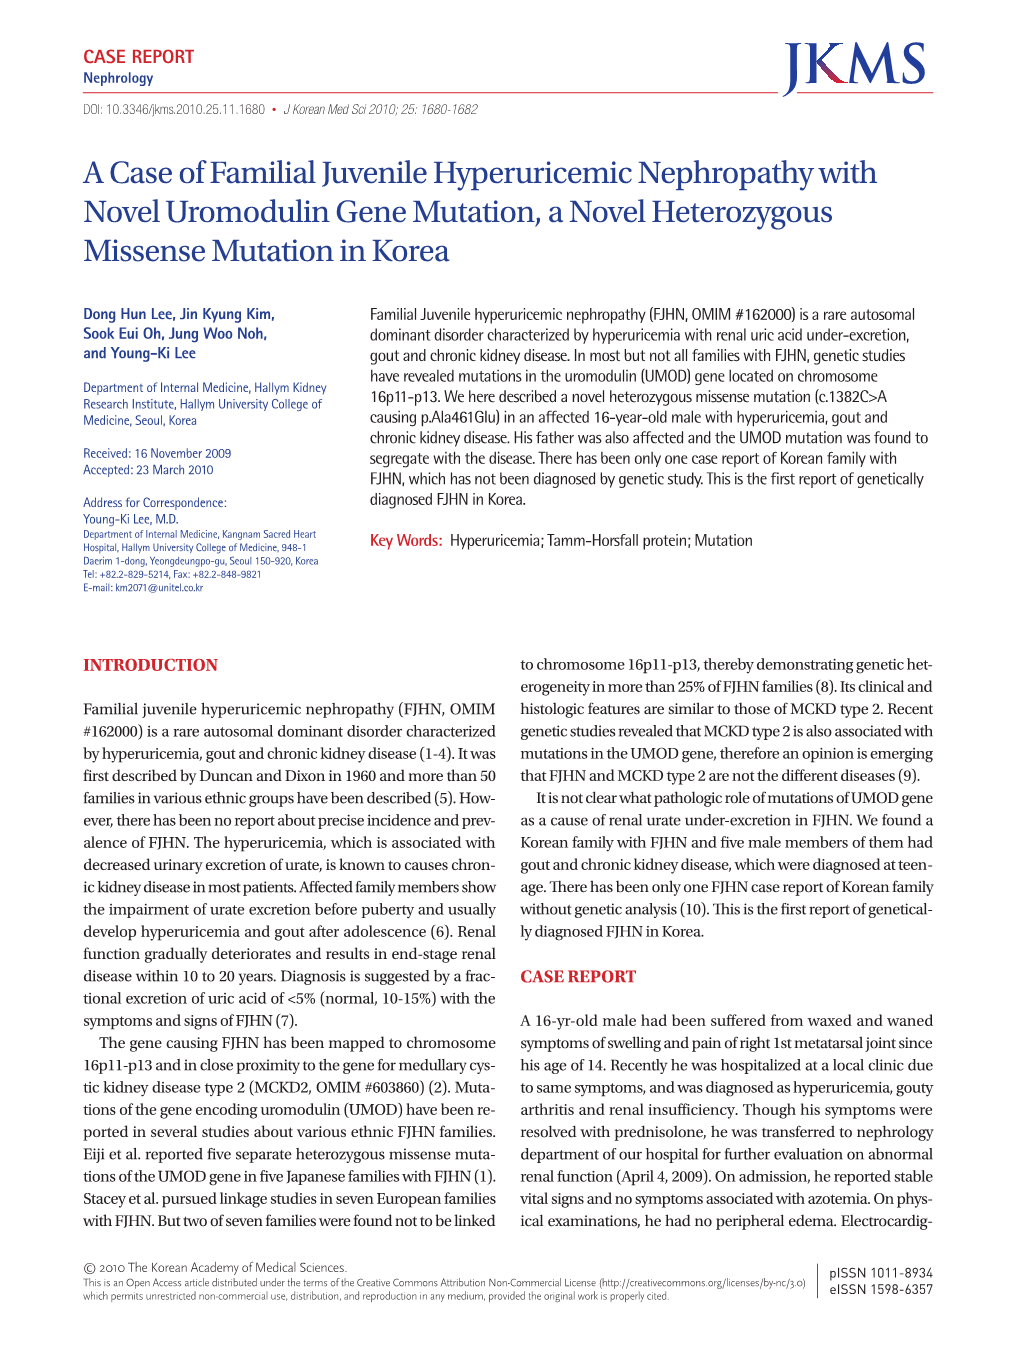 A Case of Familial Juvenile Hyperuricemic Nephropathy with Novel Uromodulin Gene Mutation, a Novel Heterozygous Missense Mutation in Korea